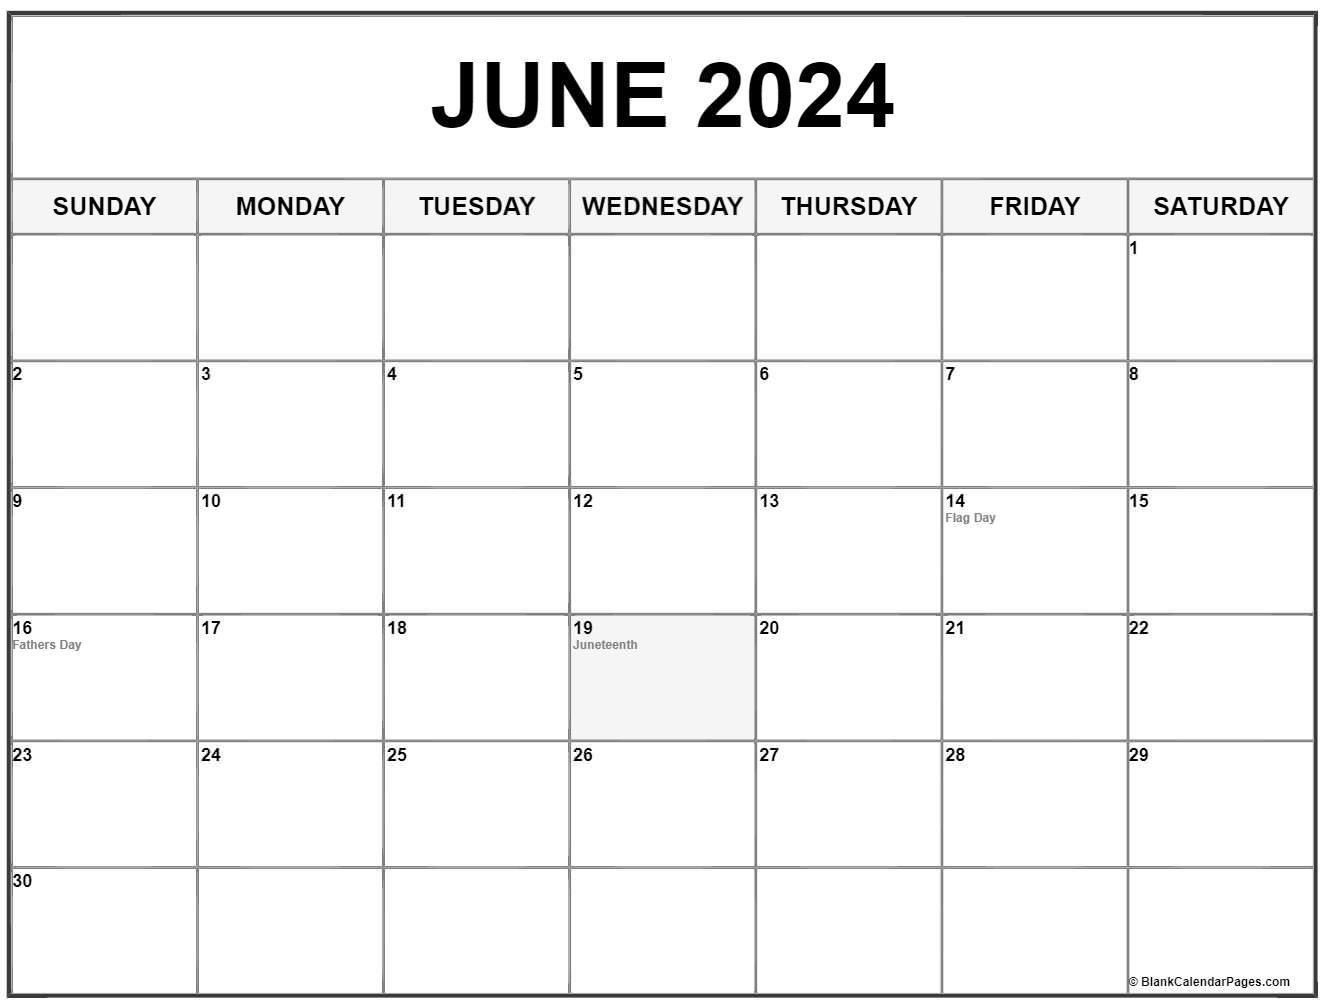 June, 2023